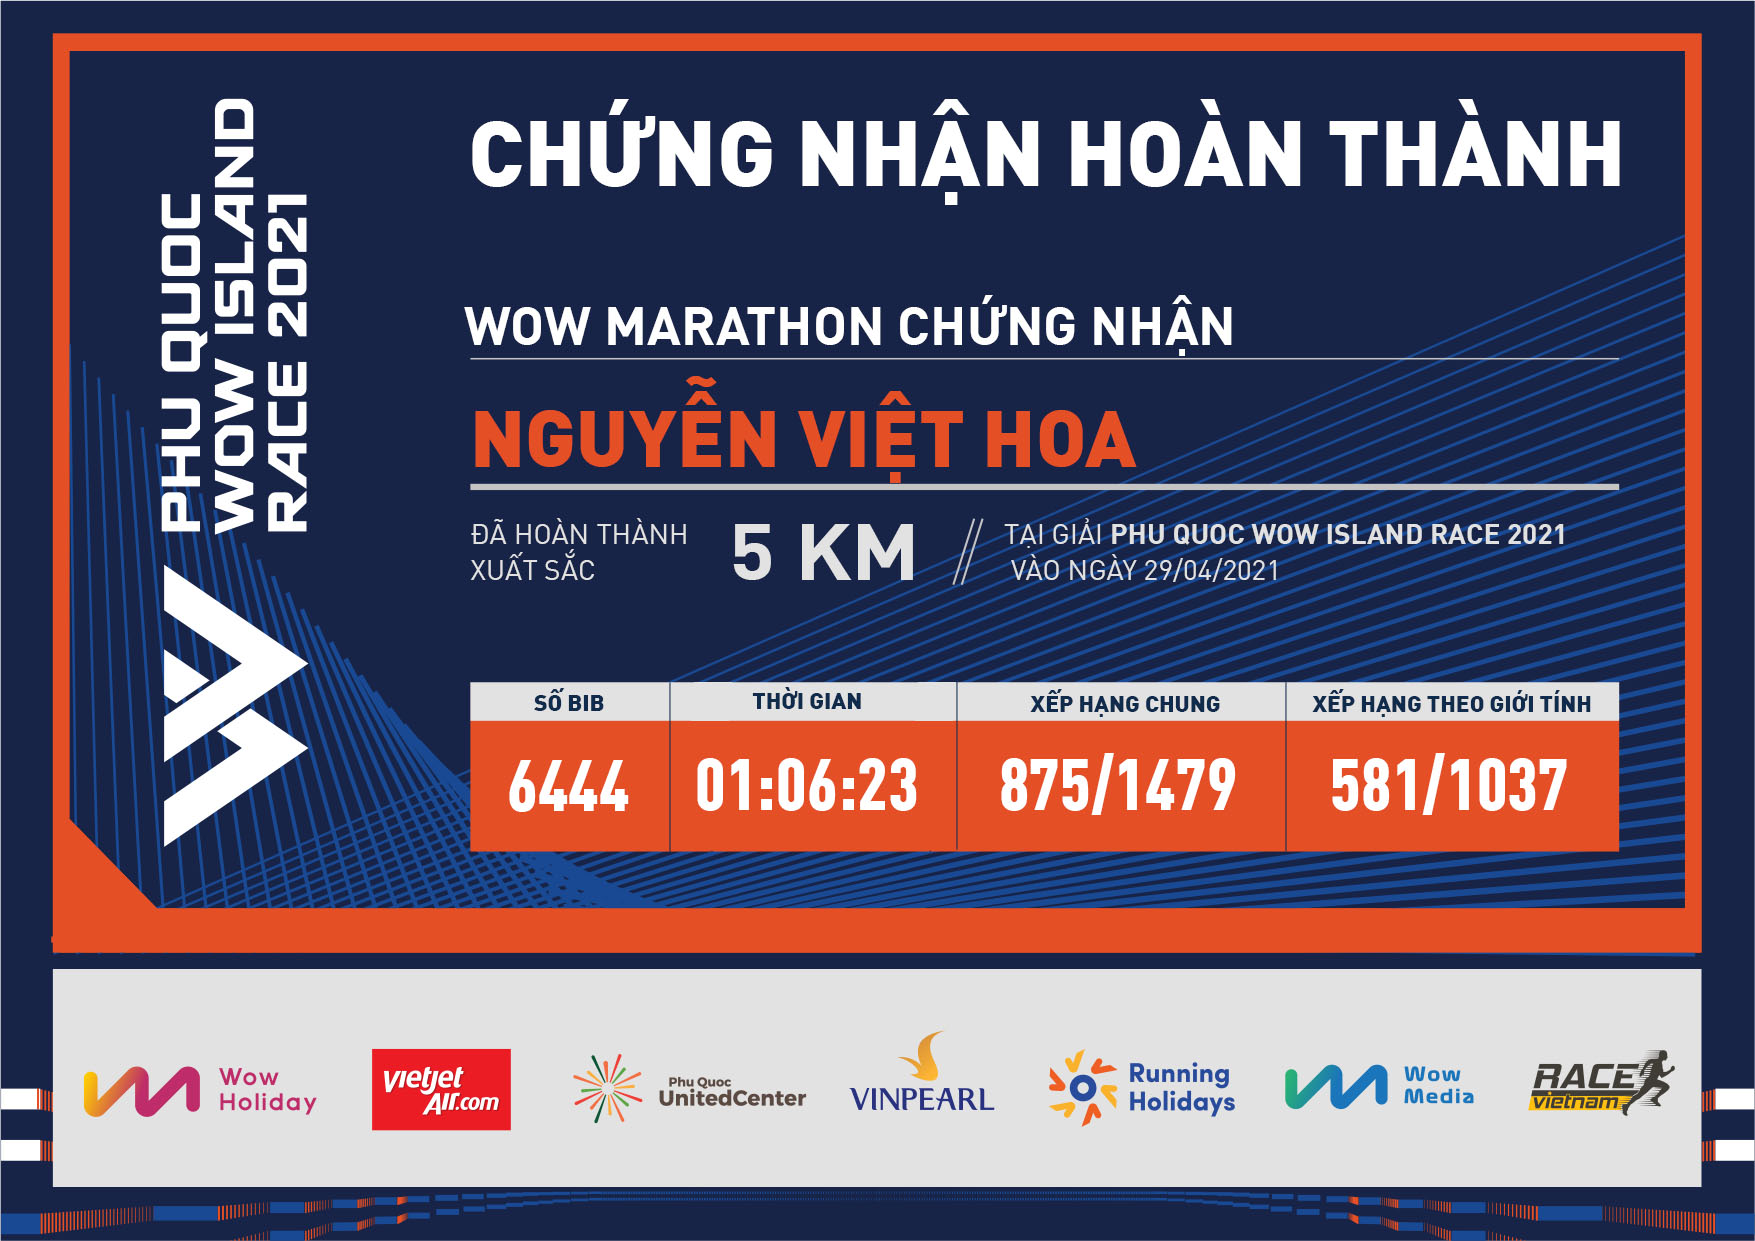 6444 - Nguyễn Việt Hoa